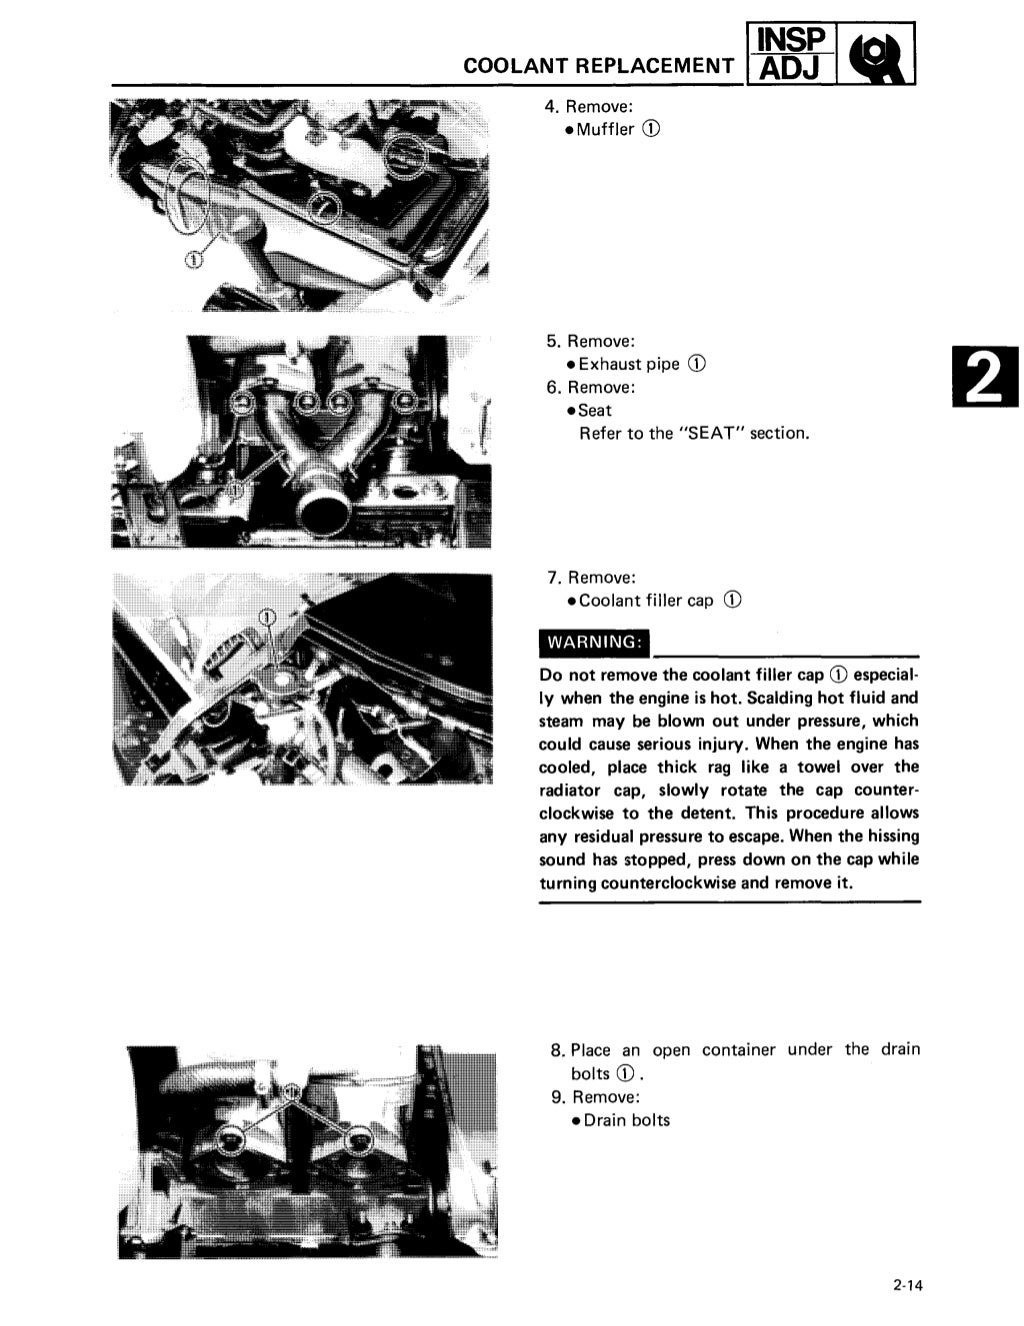 1989 Yamaha Exciter 570 Snowmobile Service Repair Manual